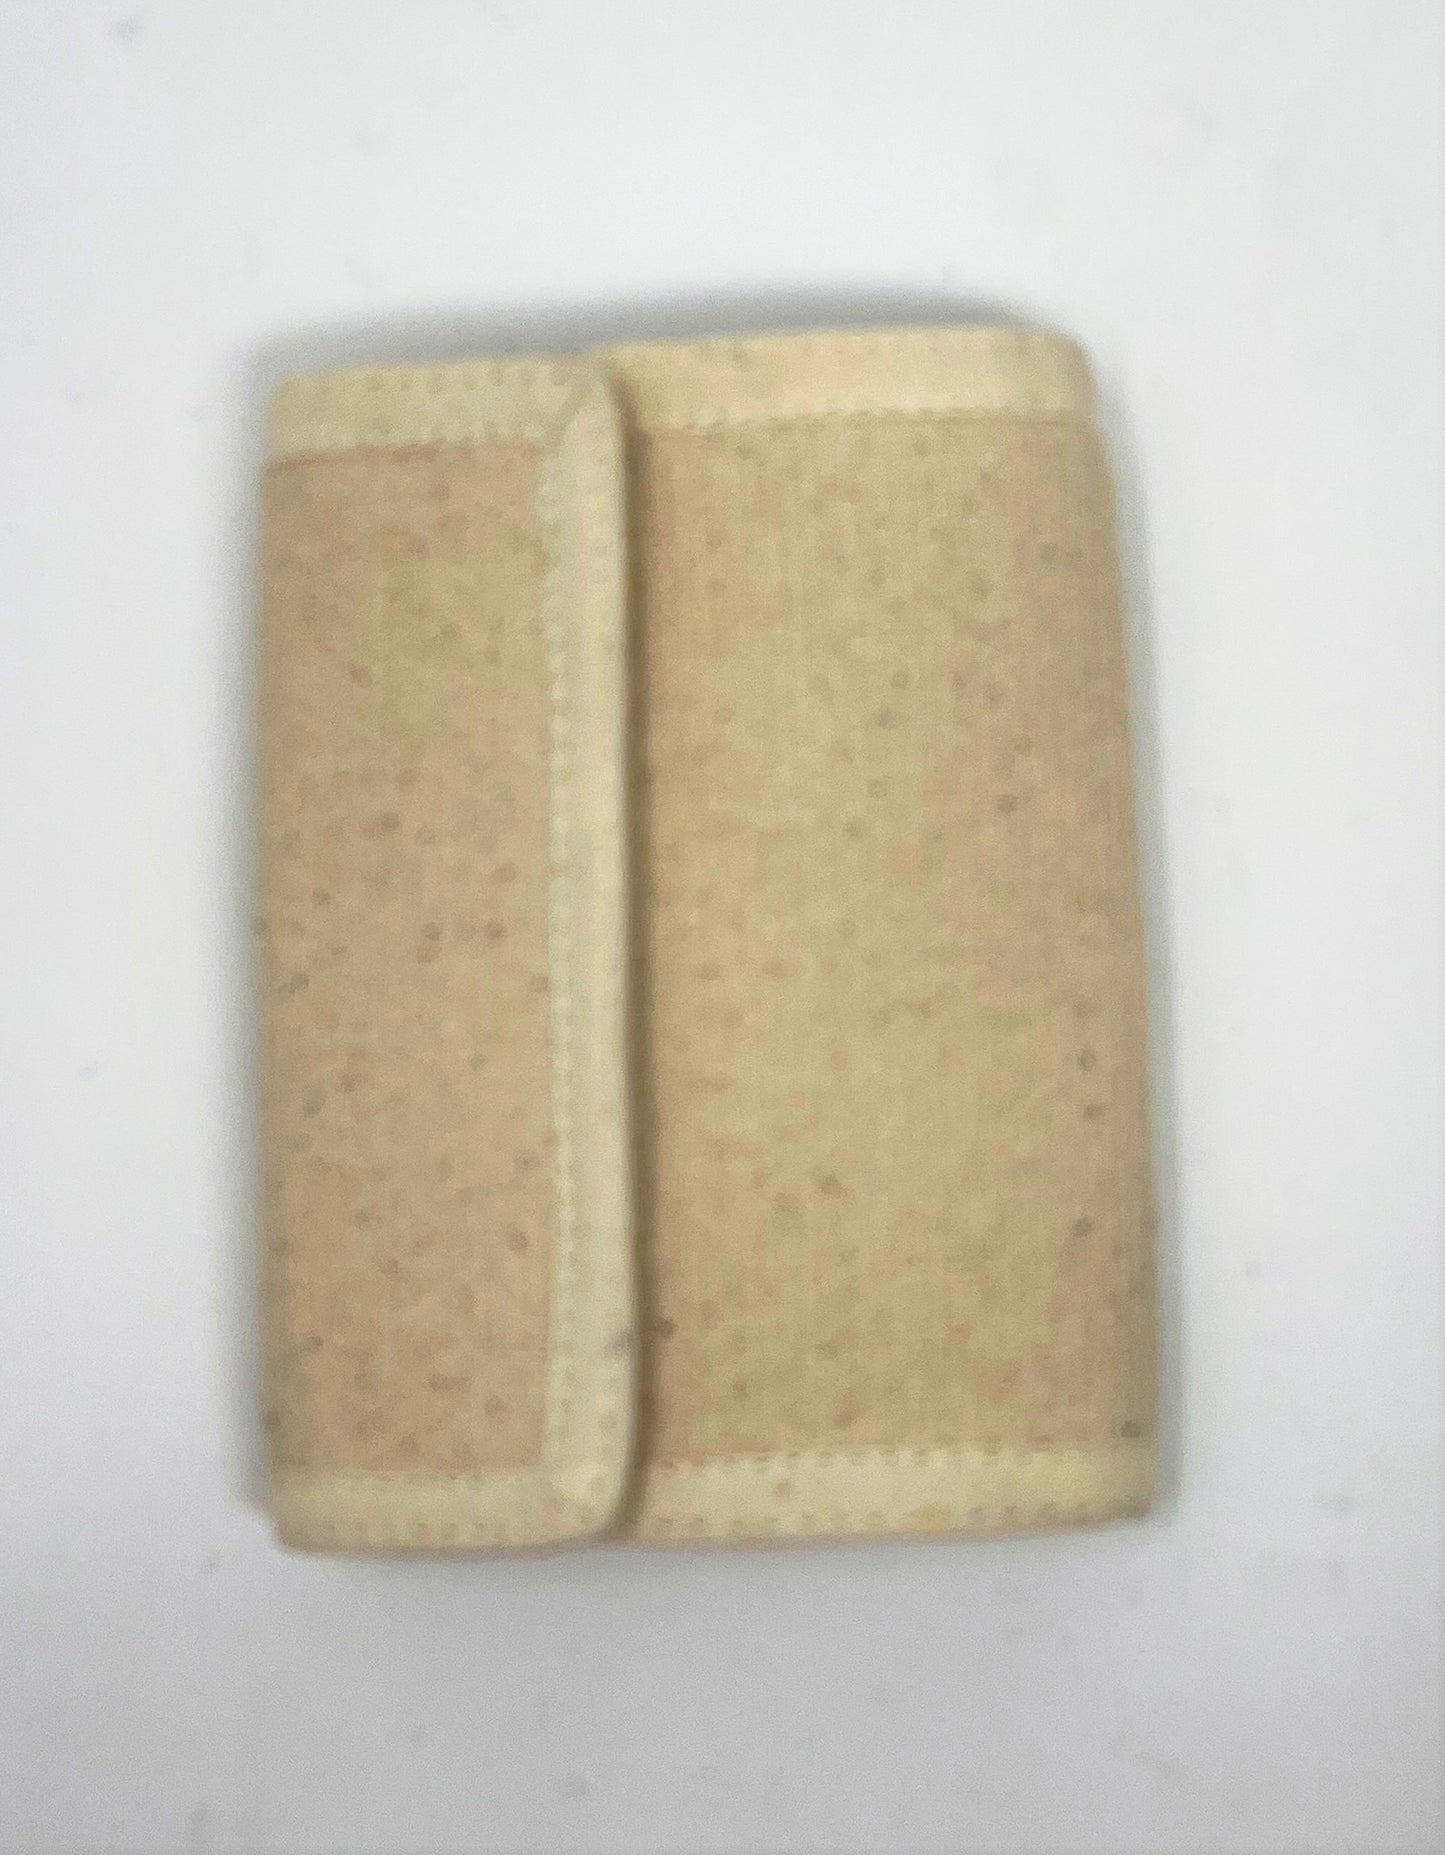 Handmade 100% Hemp Wallet with Embroidered Blue Design